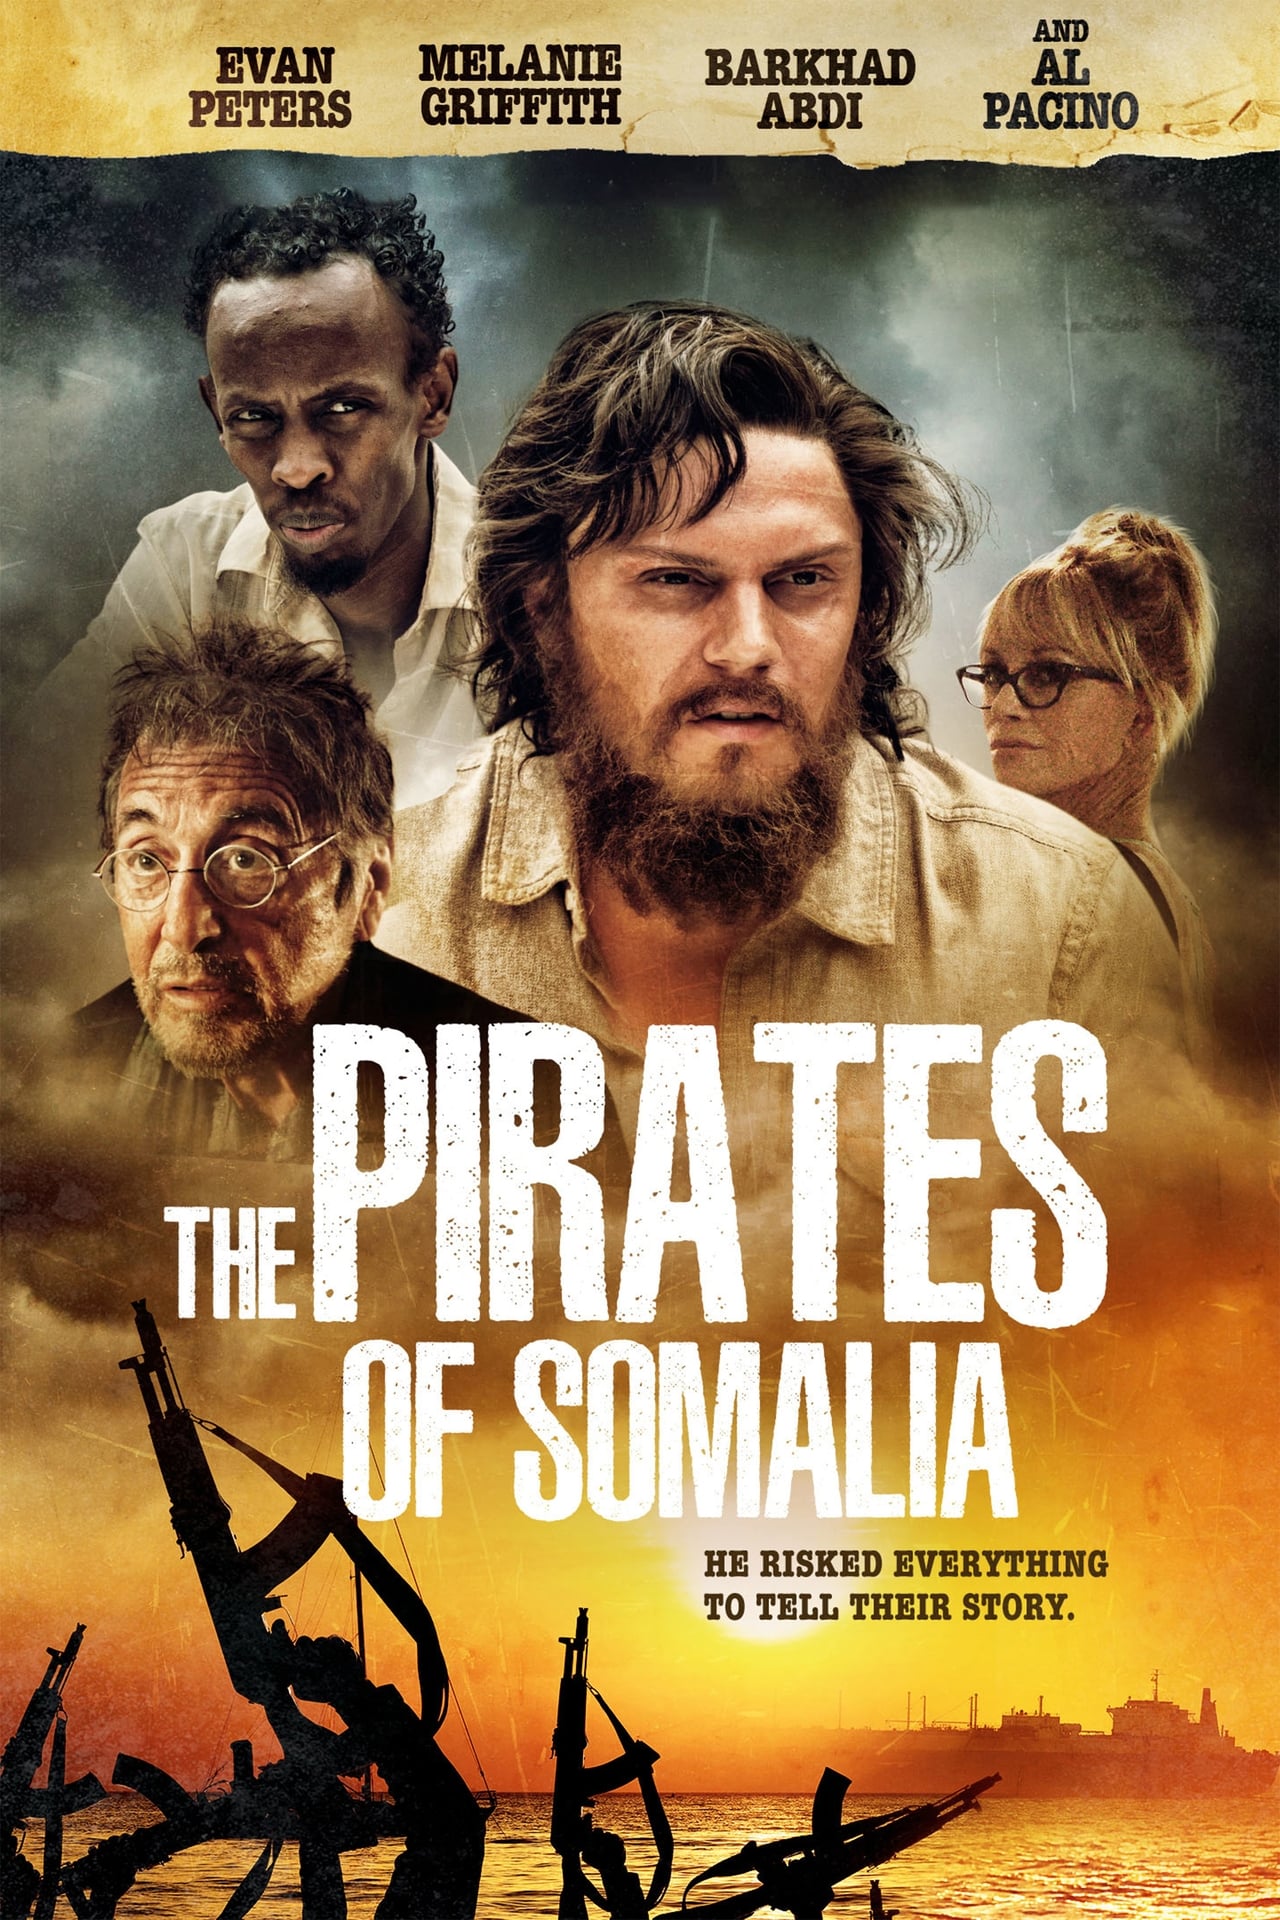 EN - The Pirates Of Somalia (2017) AL PACINO